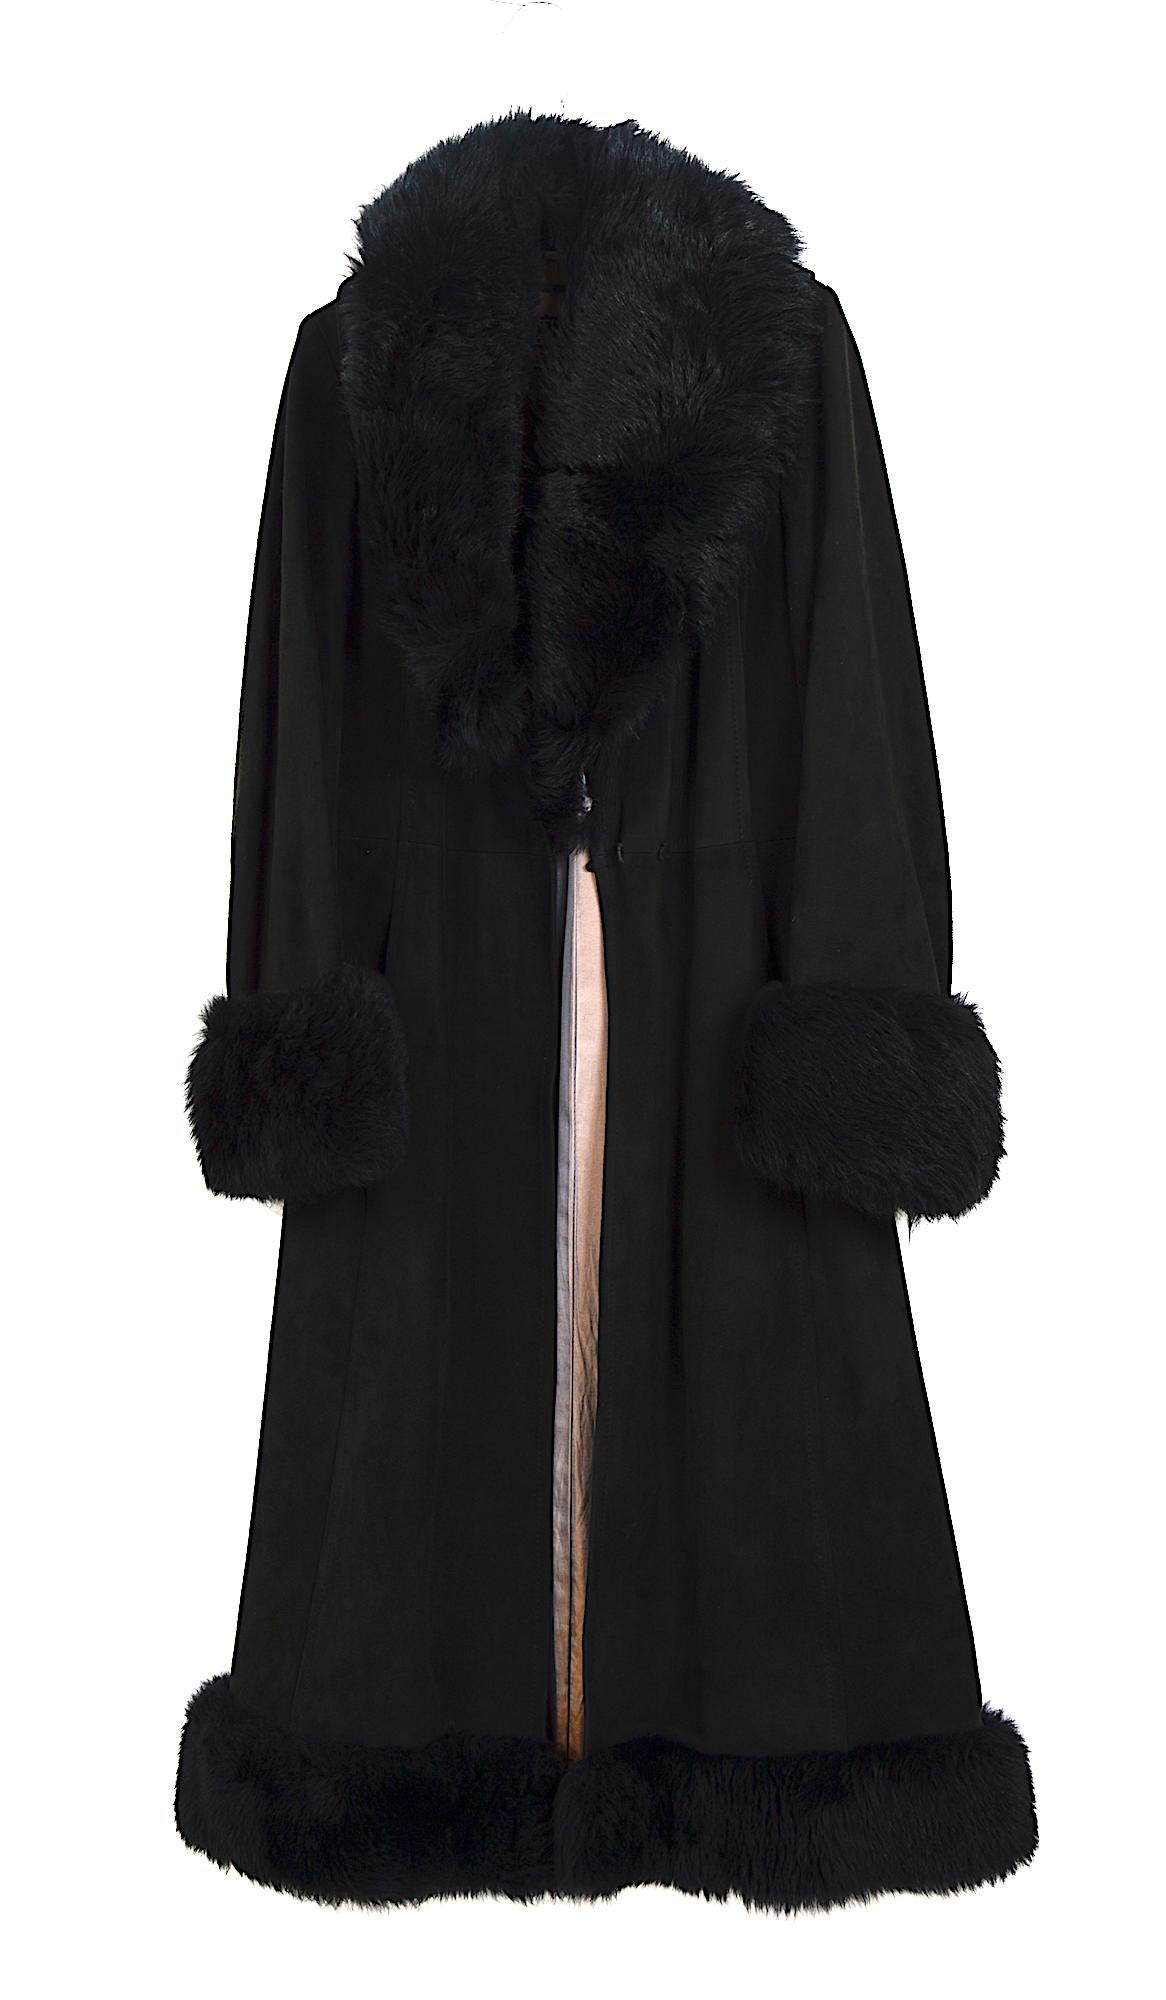 Lanvin vintage 1960s black suede belted coat with removable fur collar 3